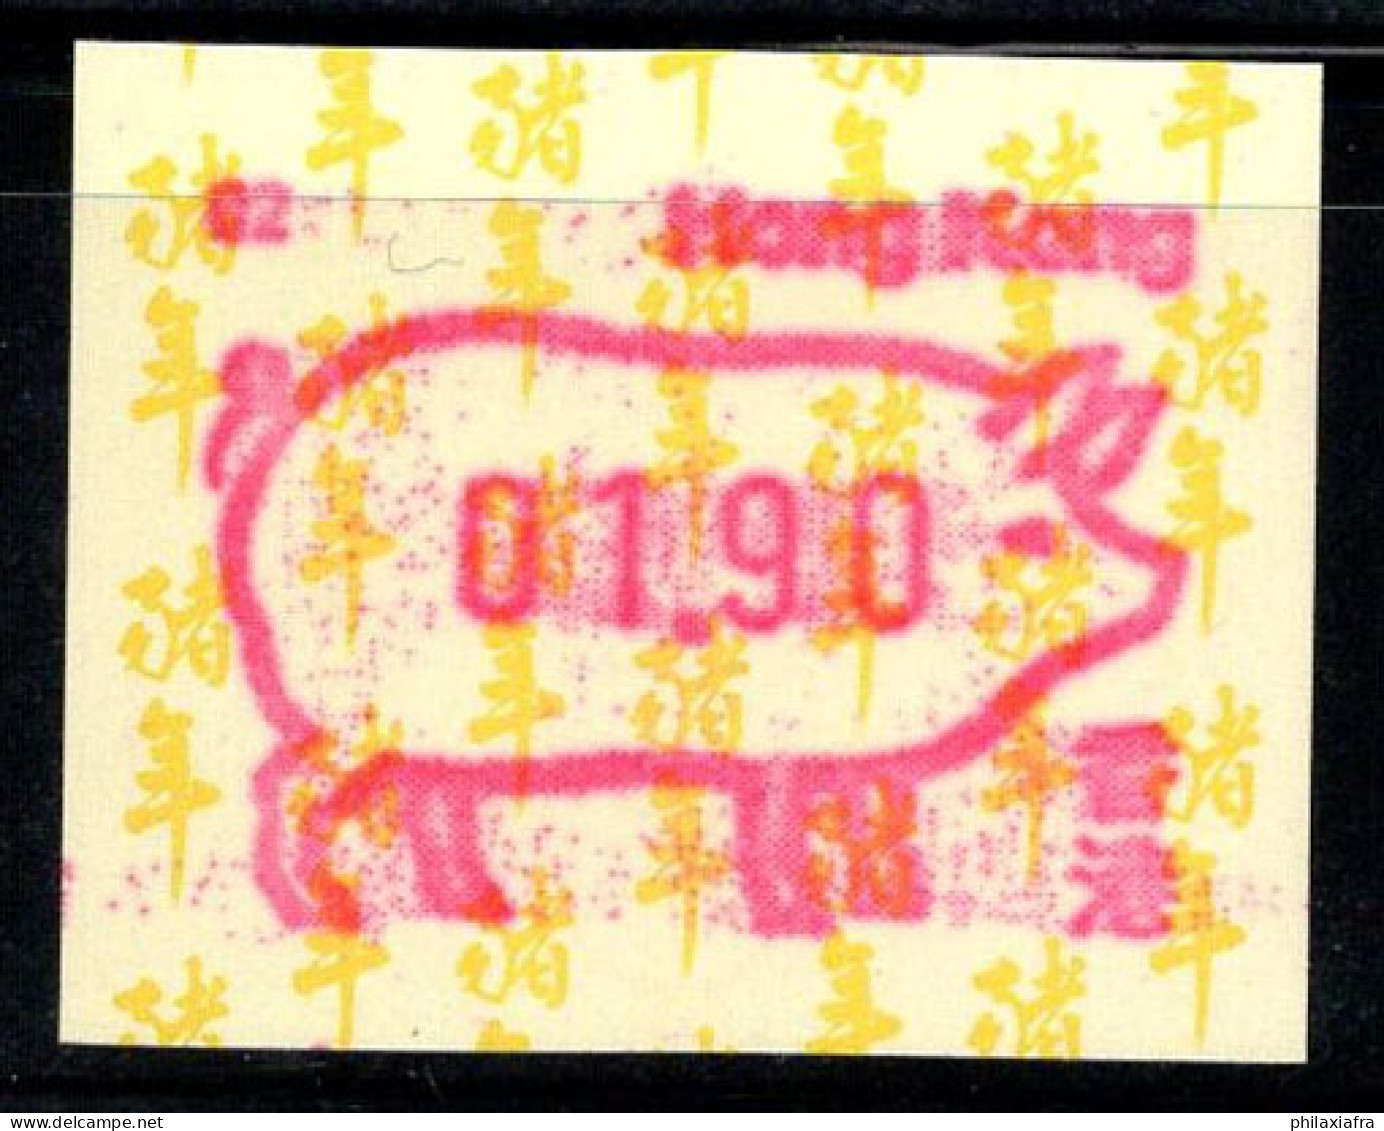 Hong Kong 1995 Mi. 10 Neuf ** 100% ATM 01.90, Porc - Distributeurs